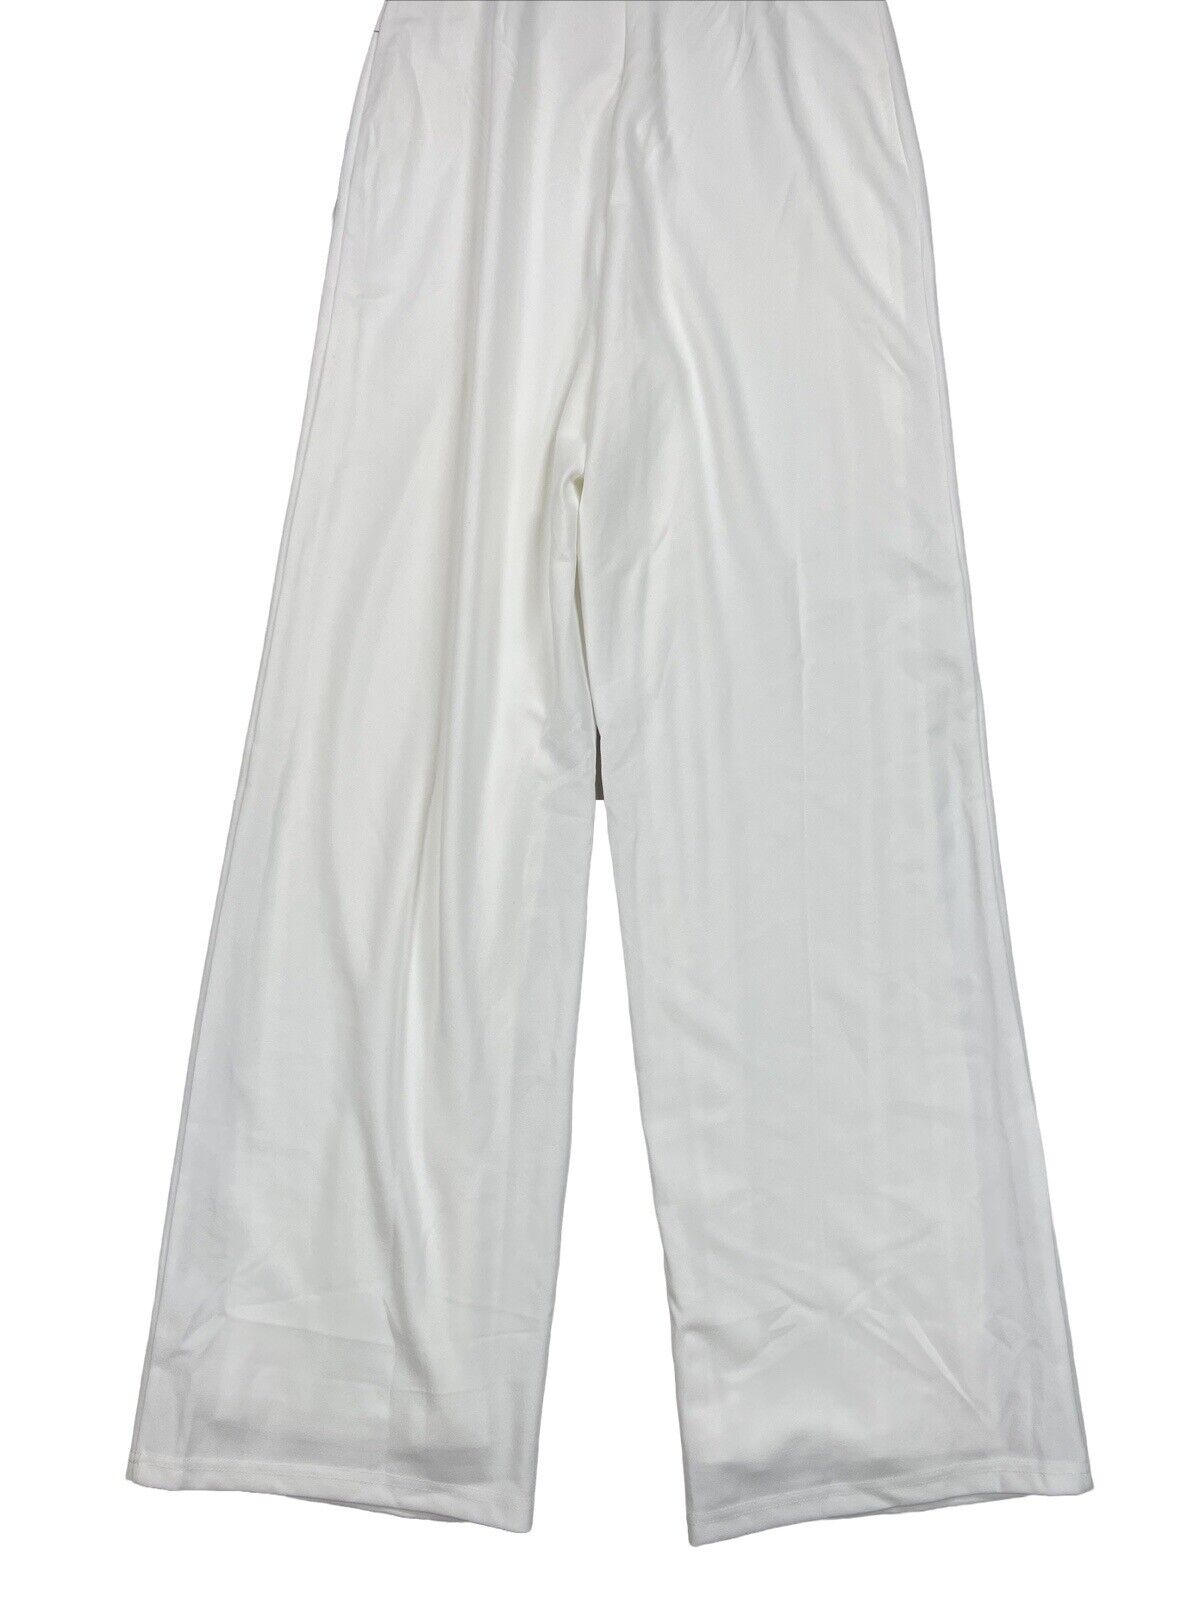 NEW Lulu's Women's White Sleeveless Long Pant Jumpsuit - M